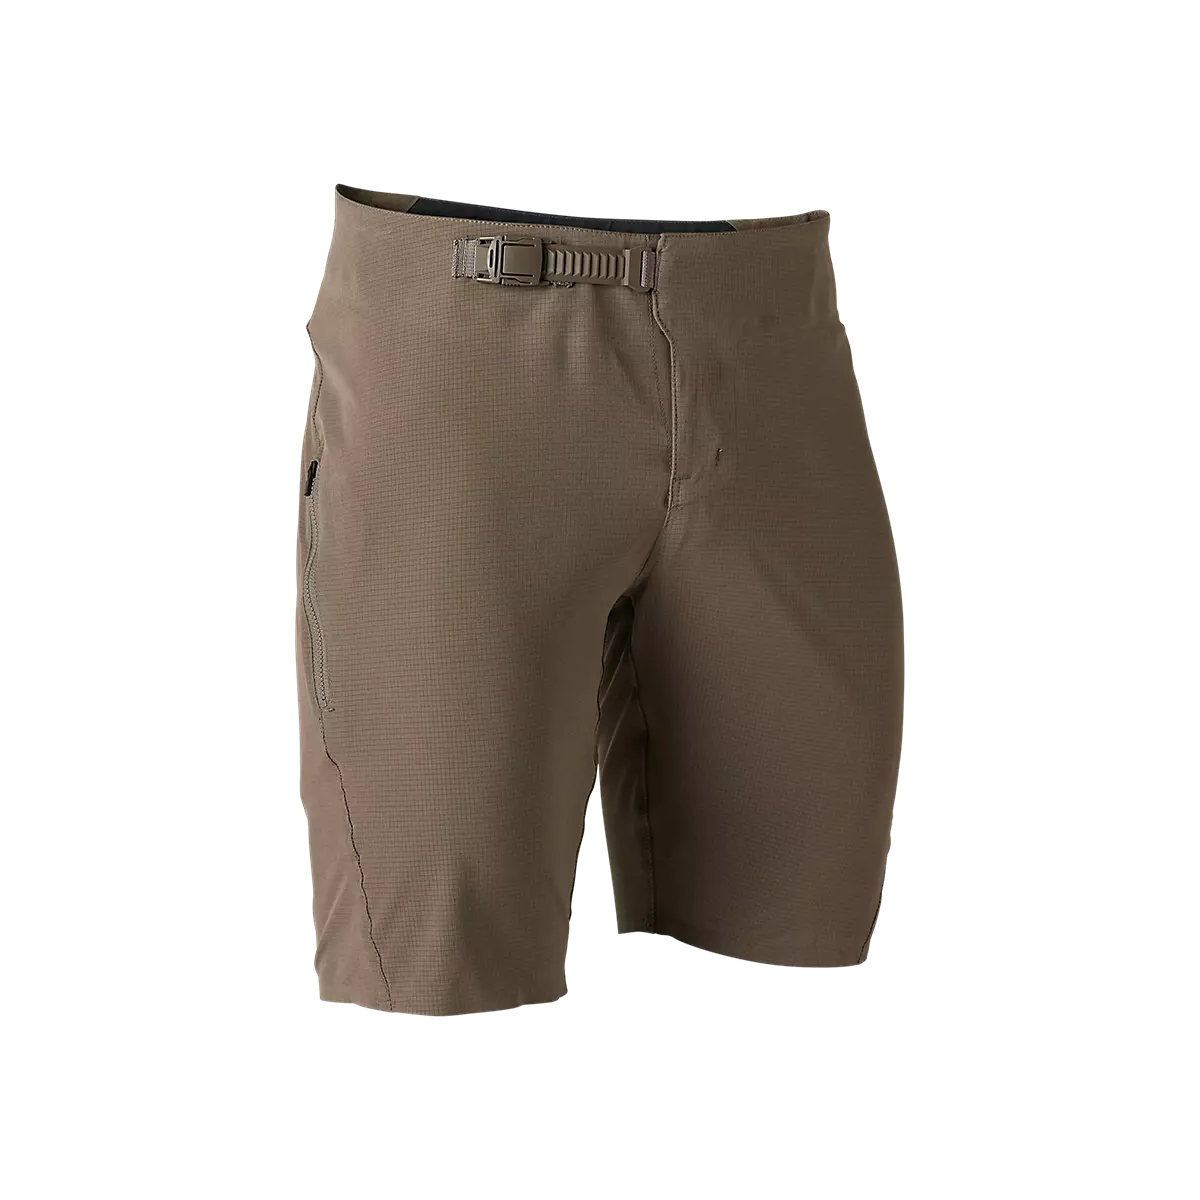 Pantalón corto Fox Flexair Ascent en color marrón con badana extraible de tallaje estrecho 30652-117